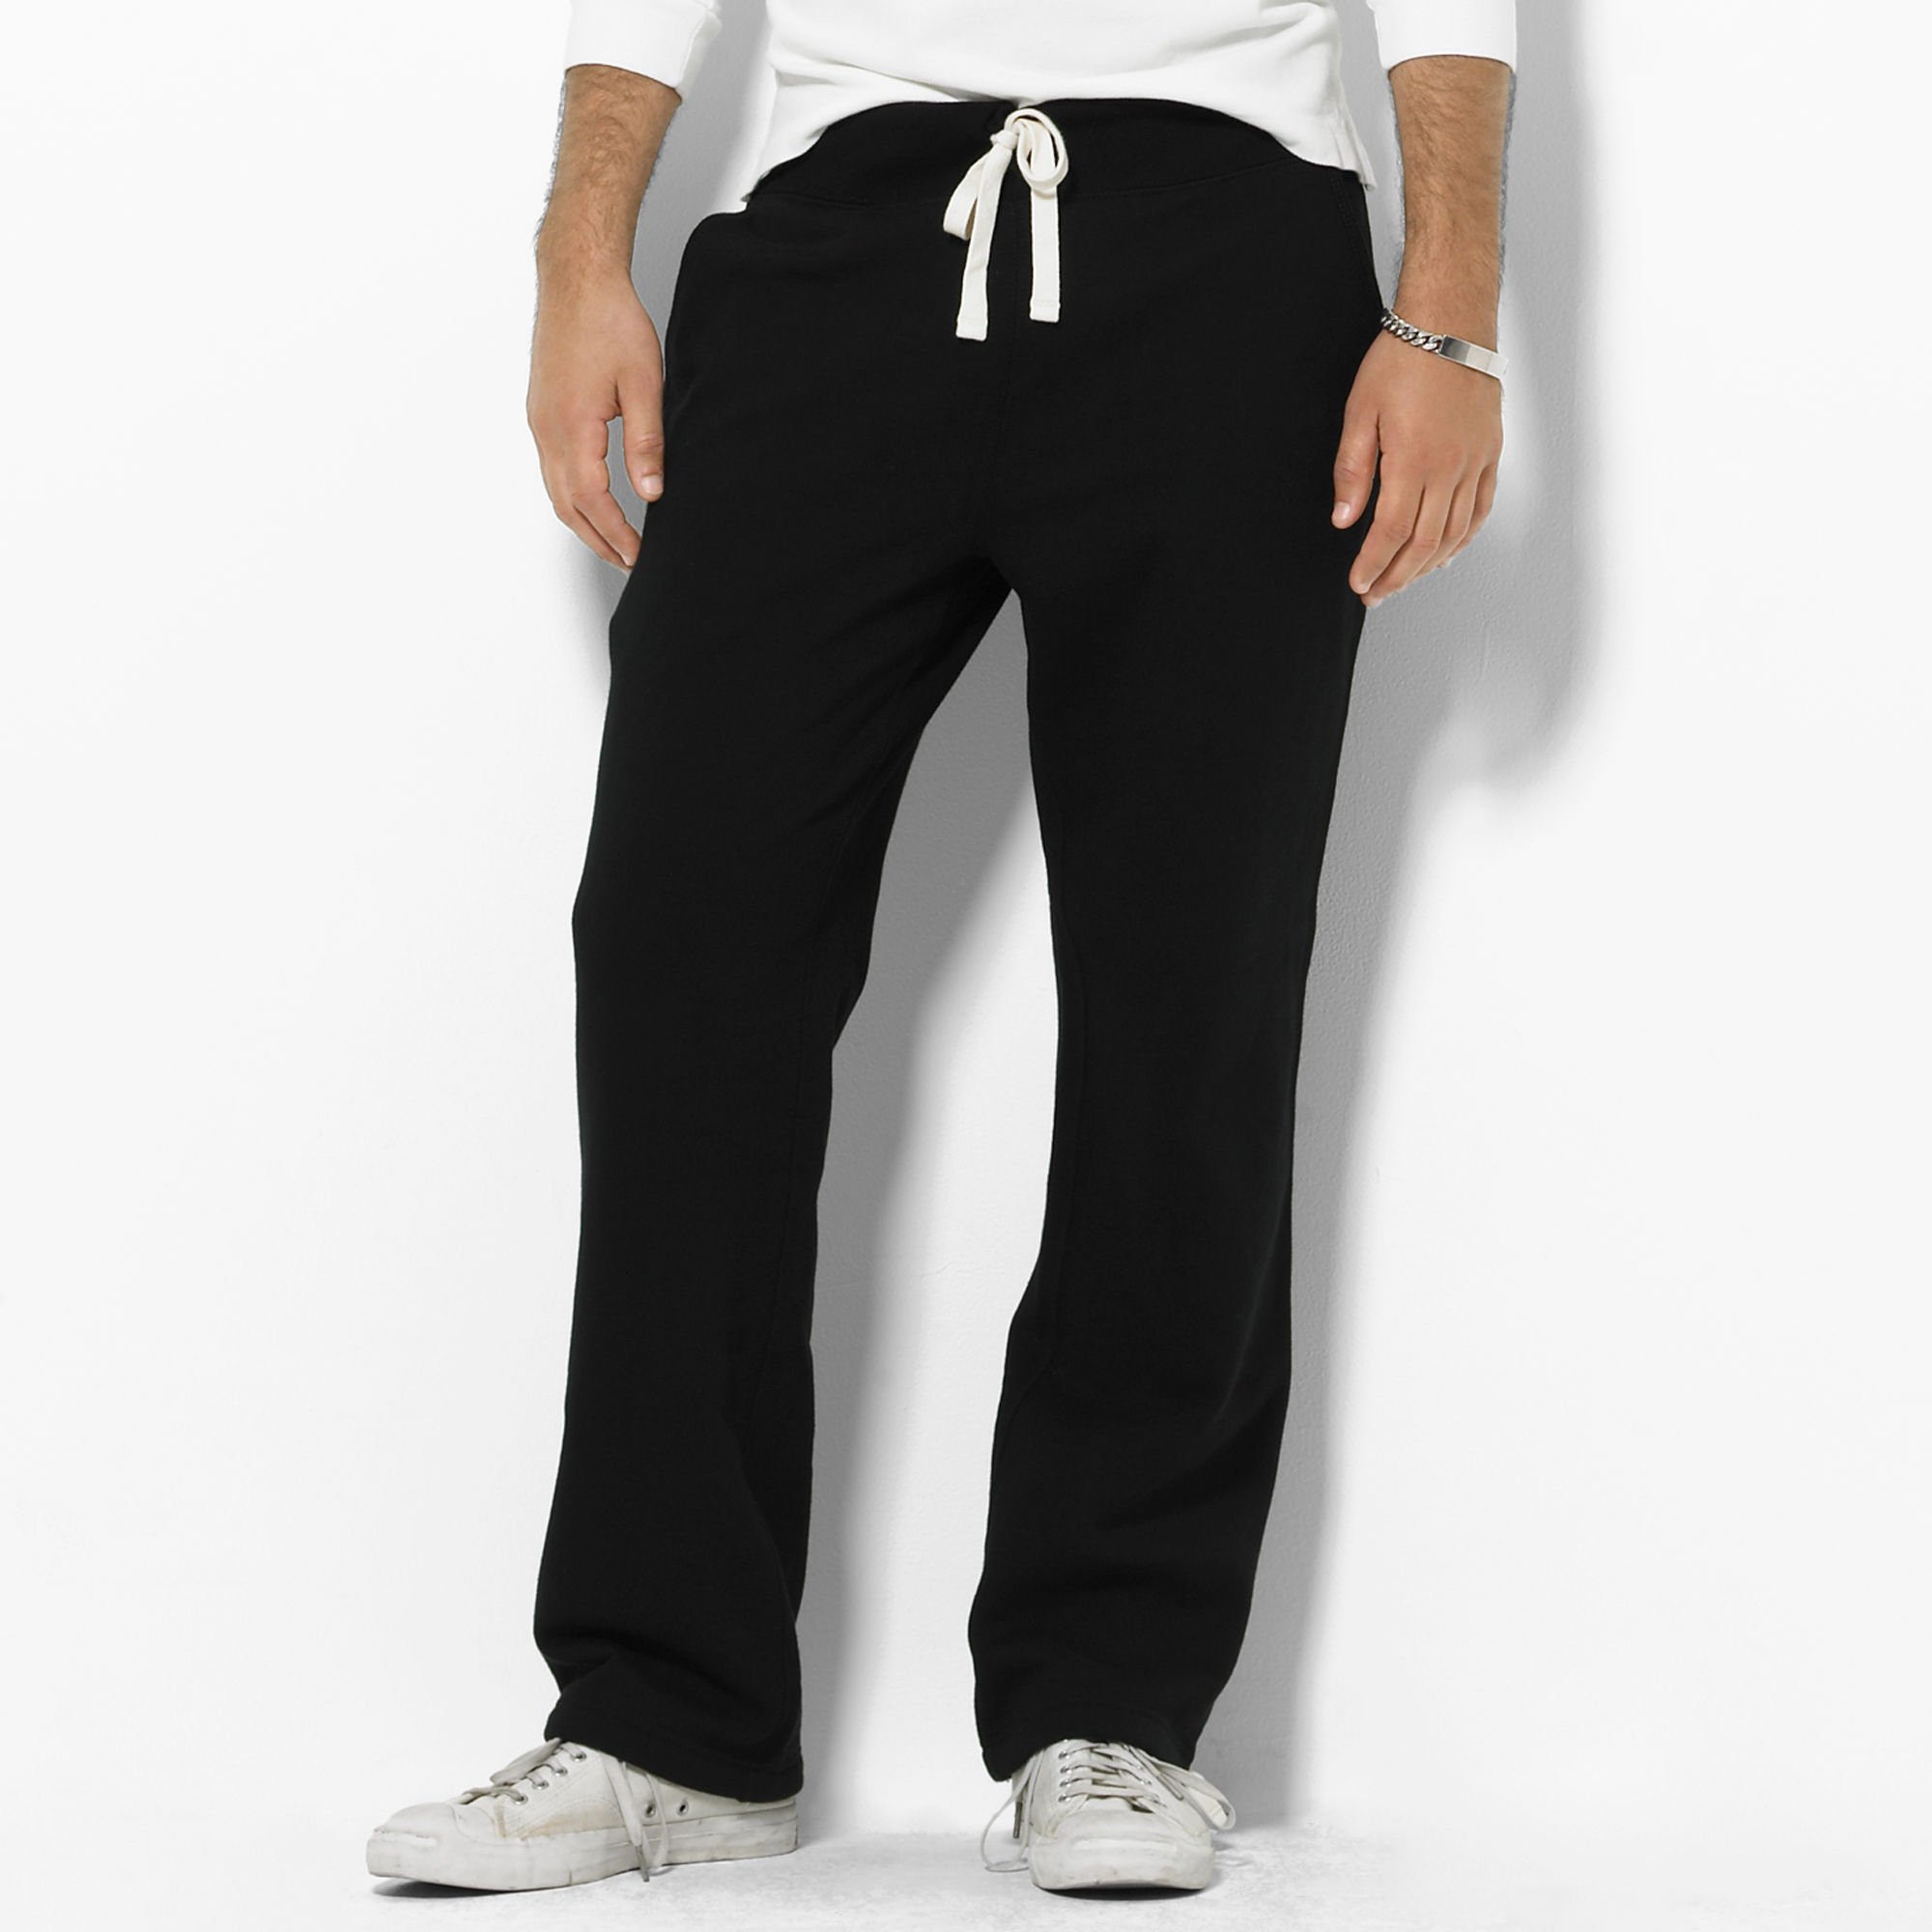 Polo Ralph Lauren Classic Fleece Athletic Pant in Black for Men - Lyst